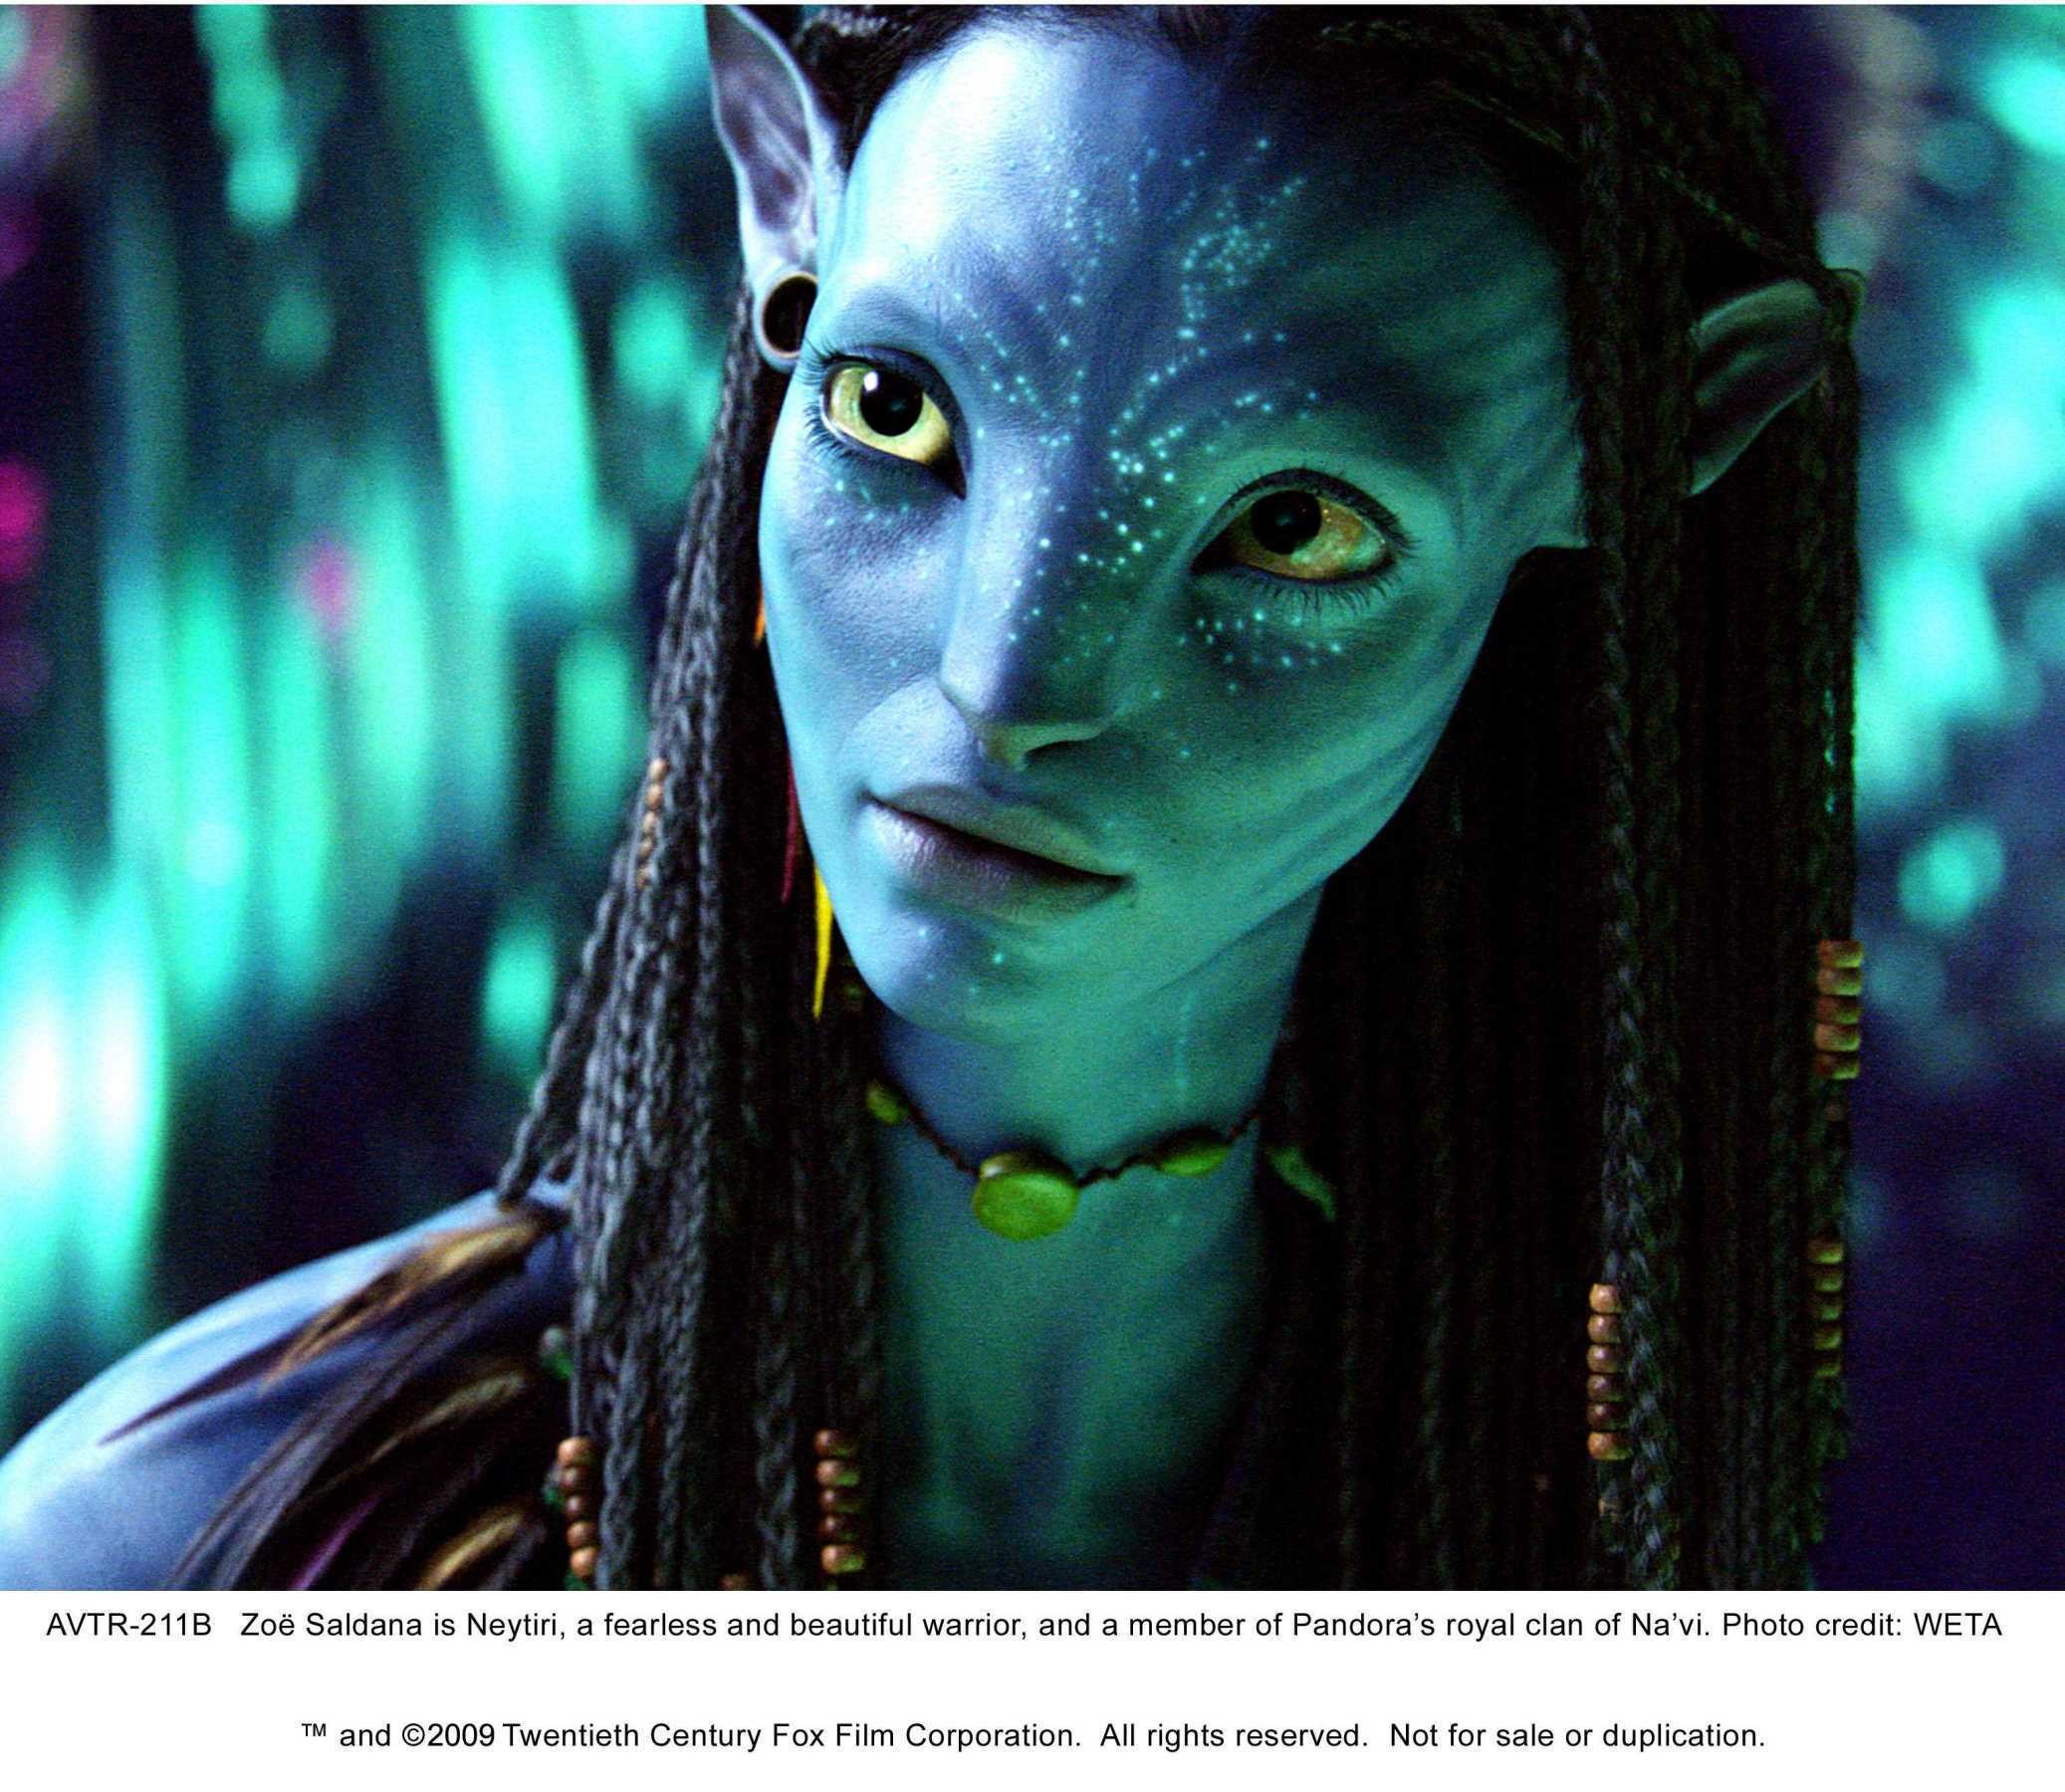 2074x1800 Zoe Saldana images Zoe Saldana as Neytiri in Avatar HD wallpaper and  background photos